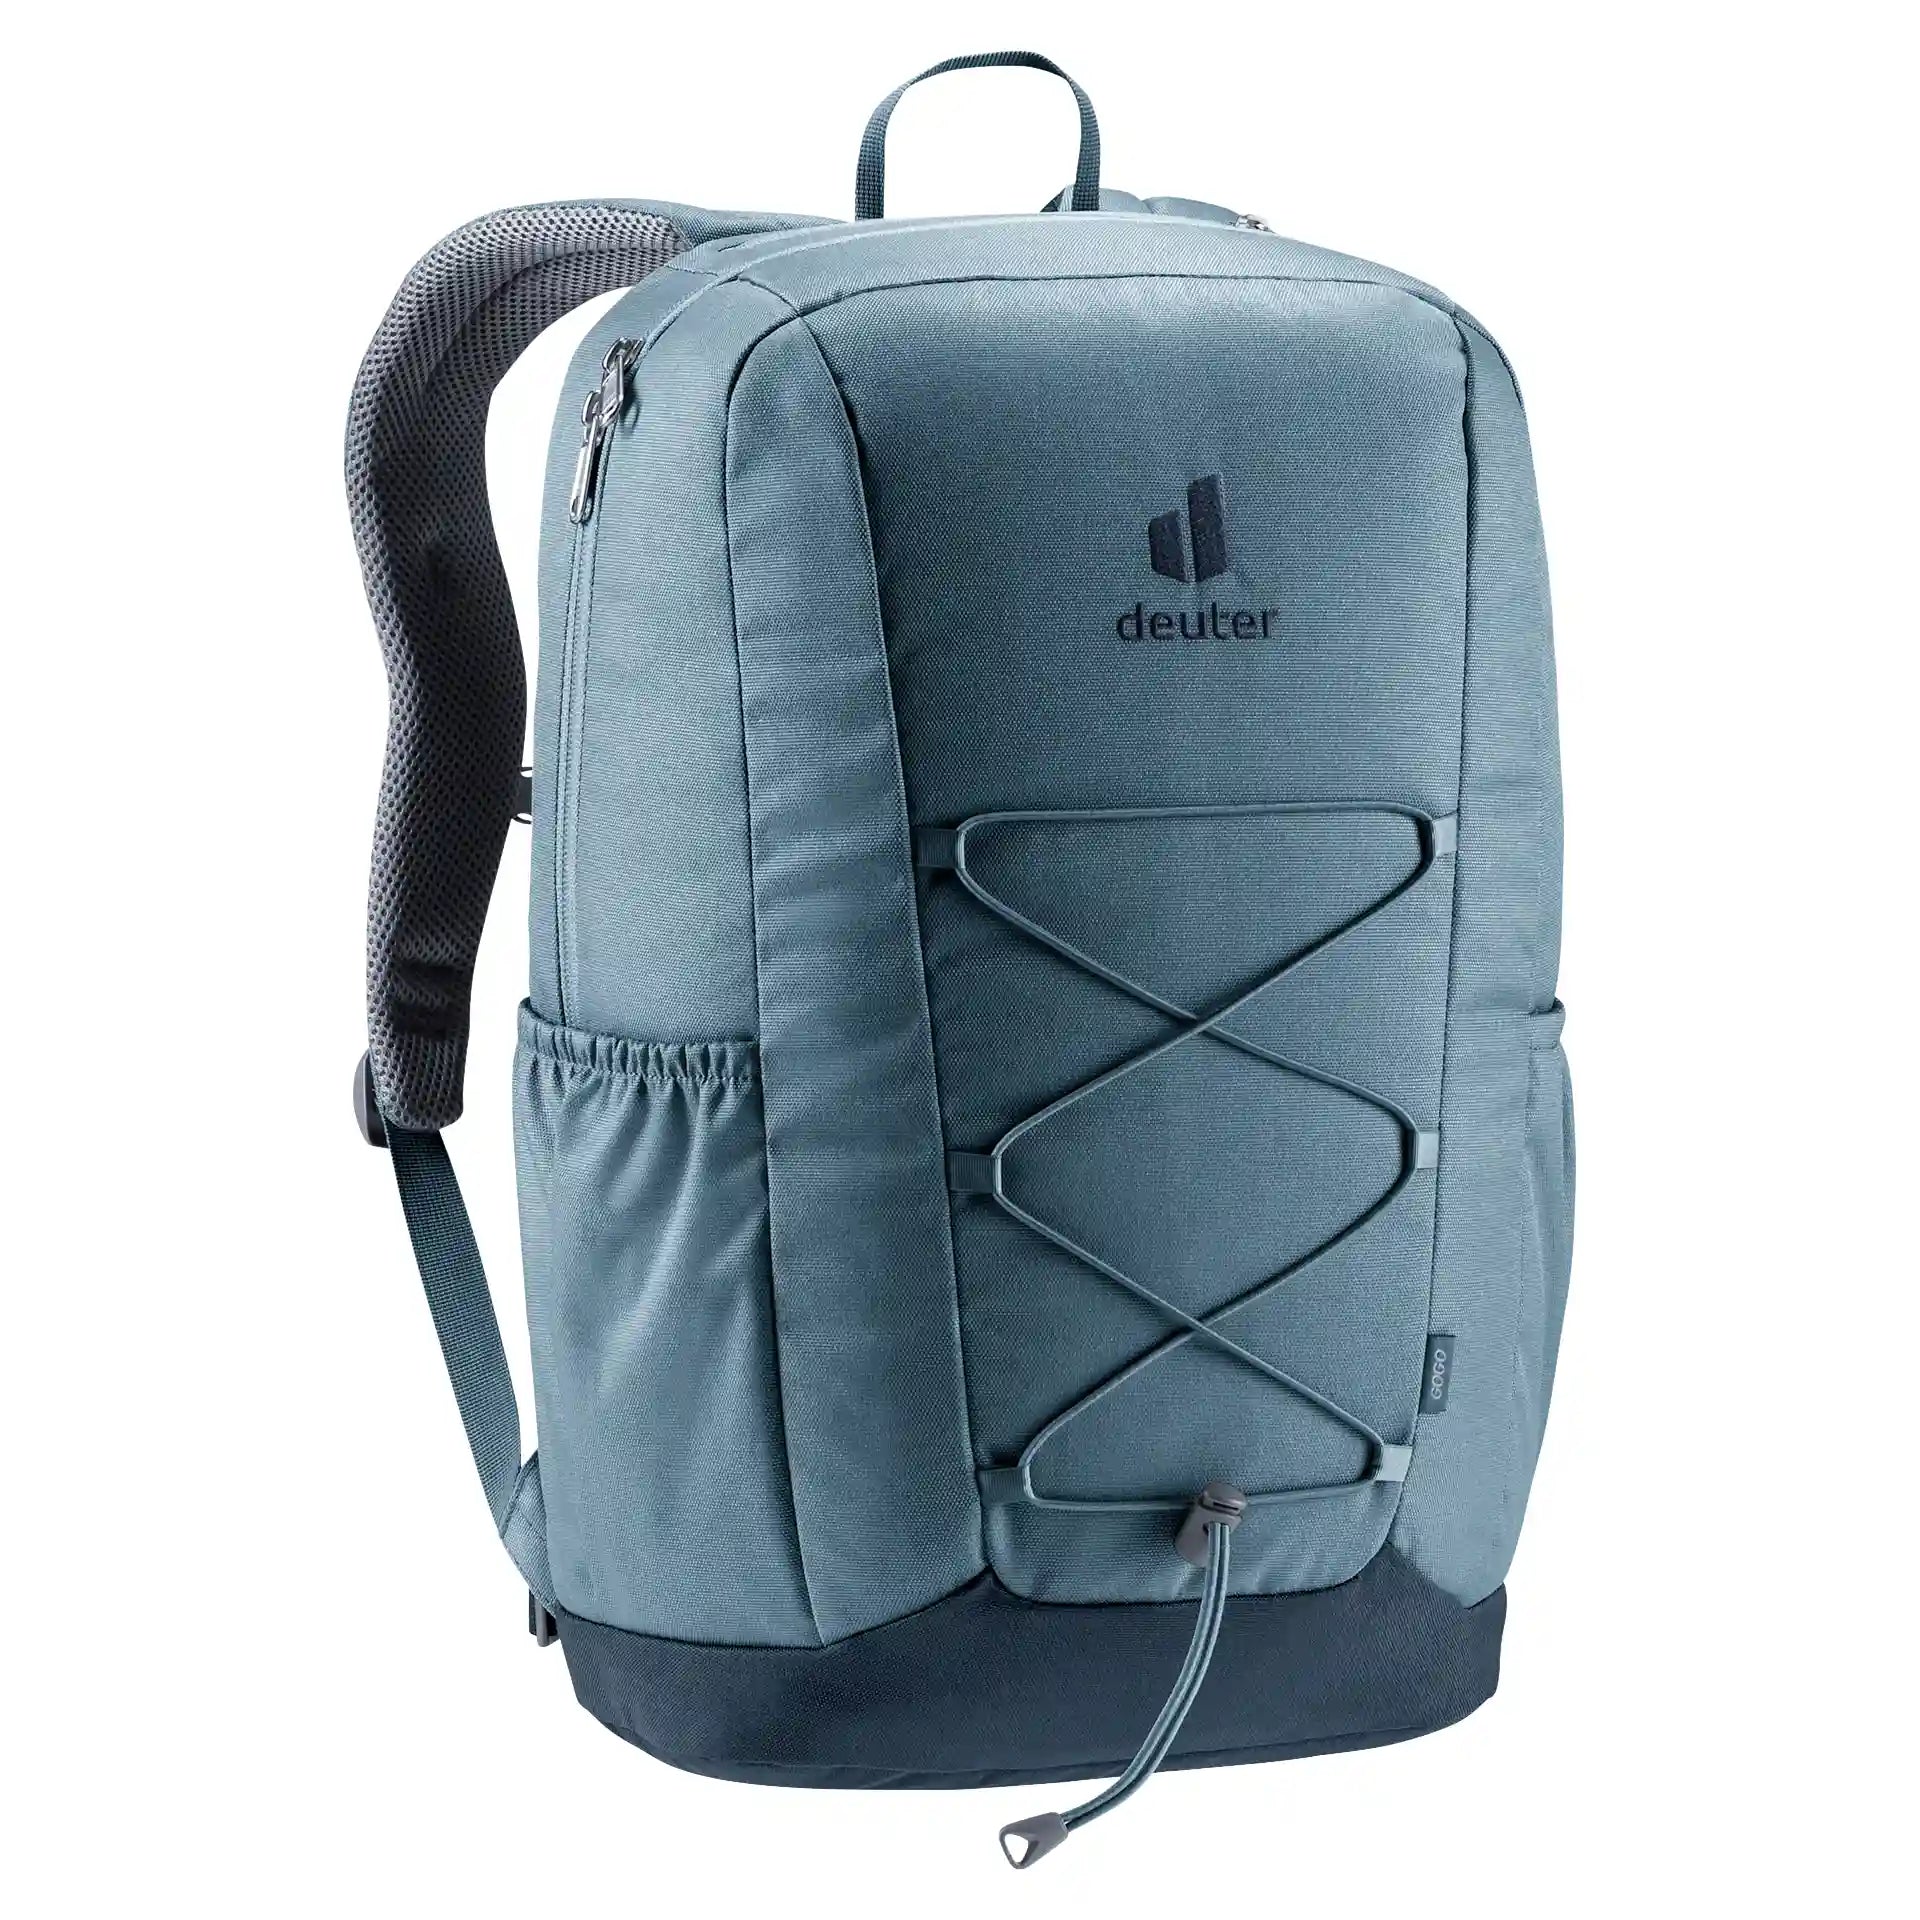 Deuter Gogo Lifestyle Backpack 46 cm - Atlantic Ink